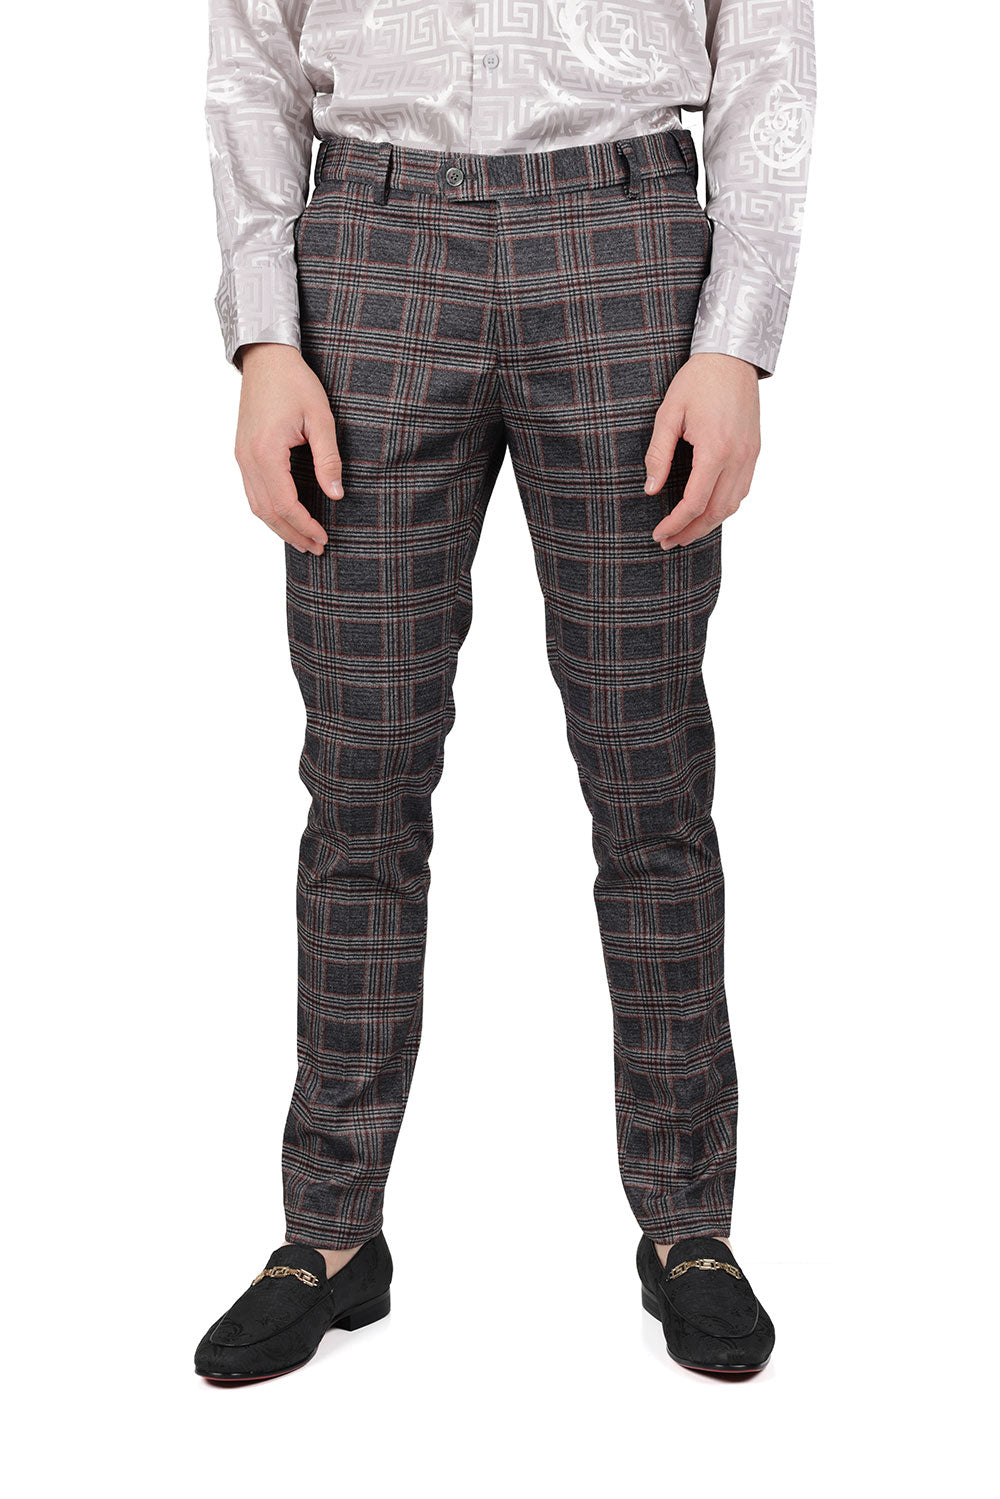 BARABAS men's checkered plaid grey orange chino pants CP156